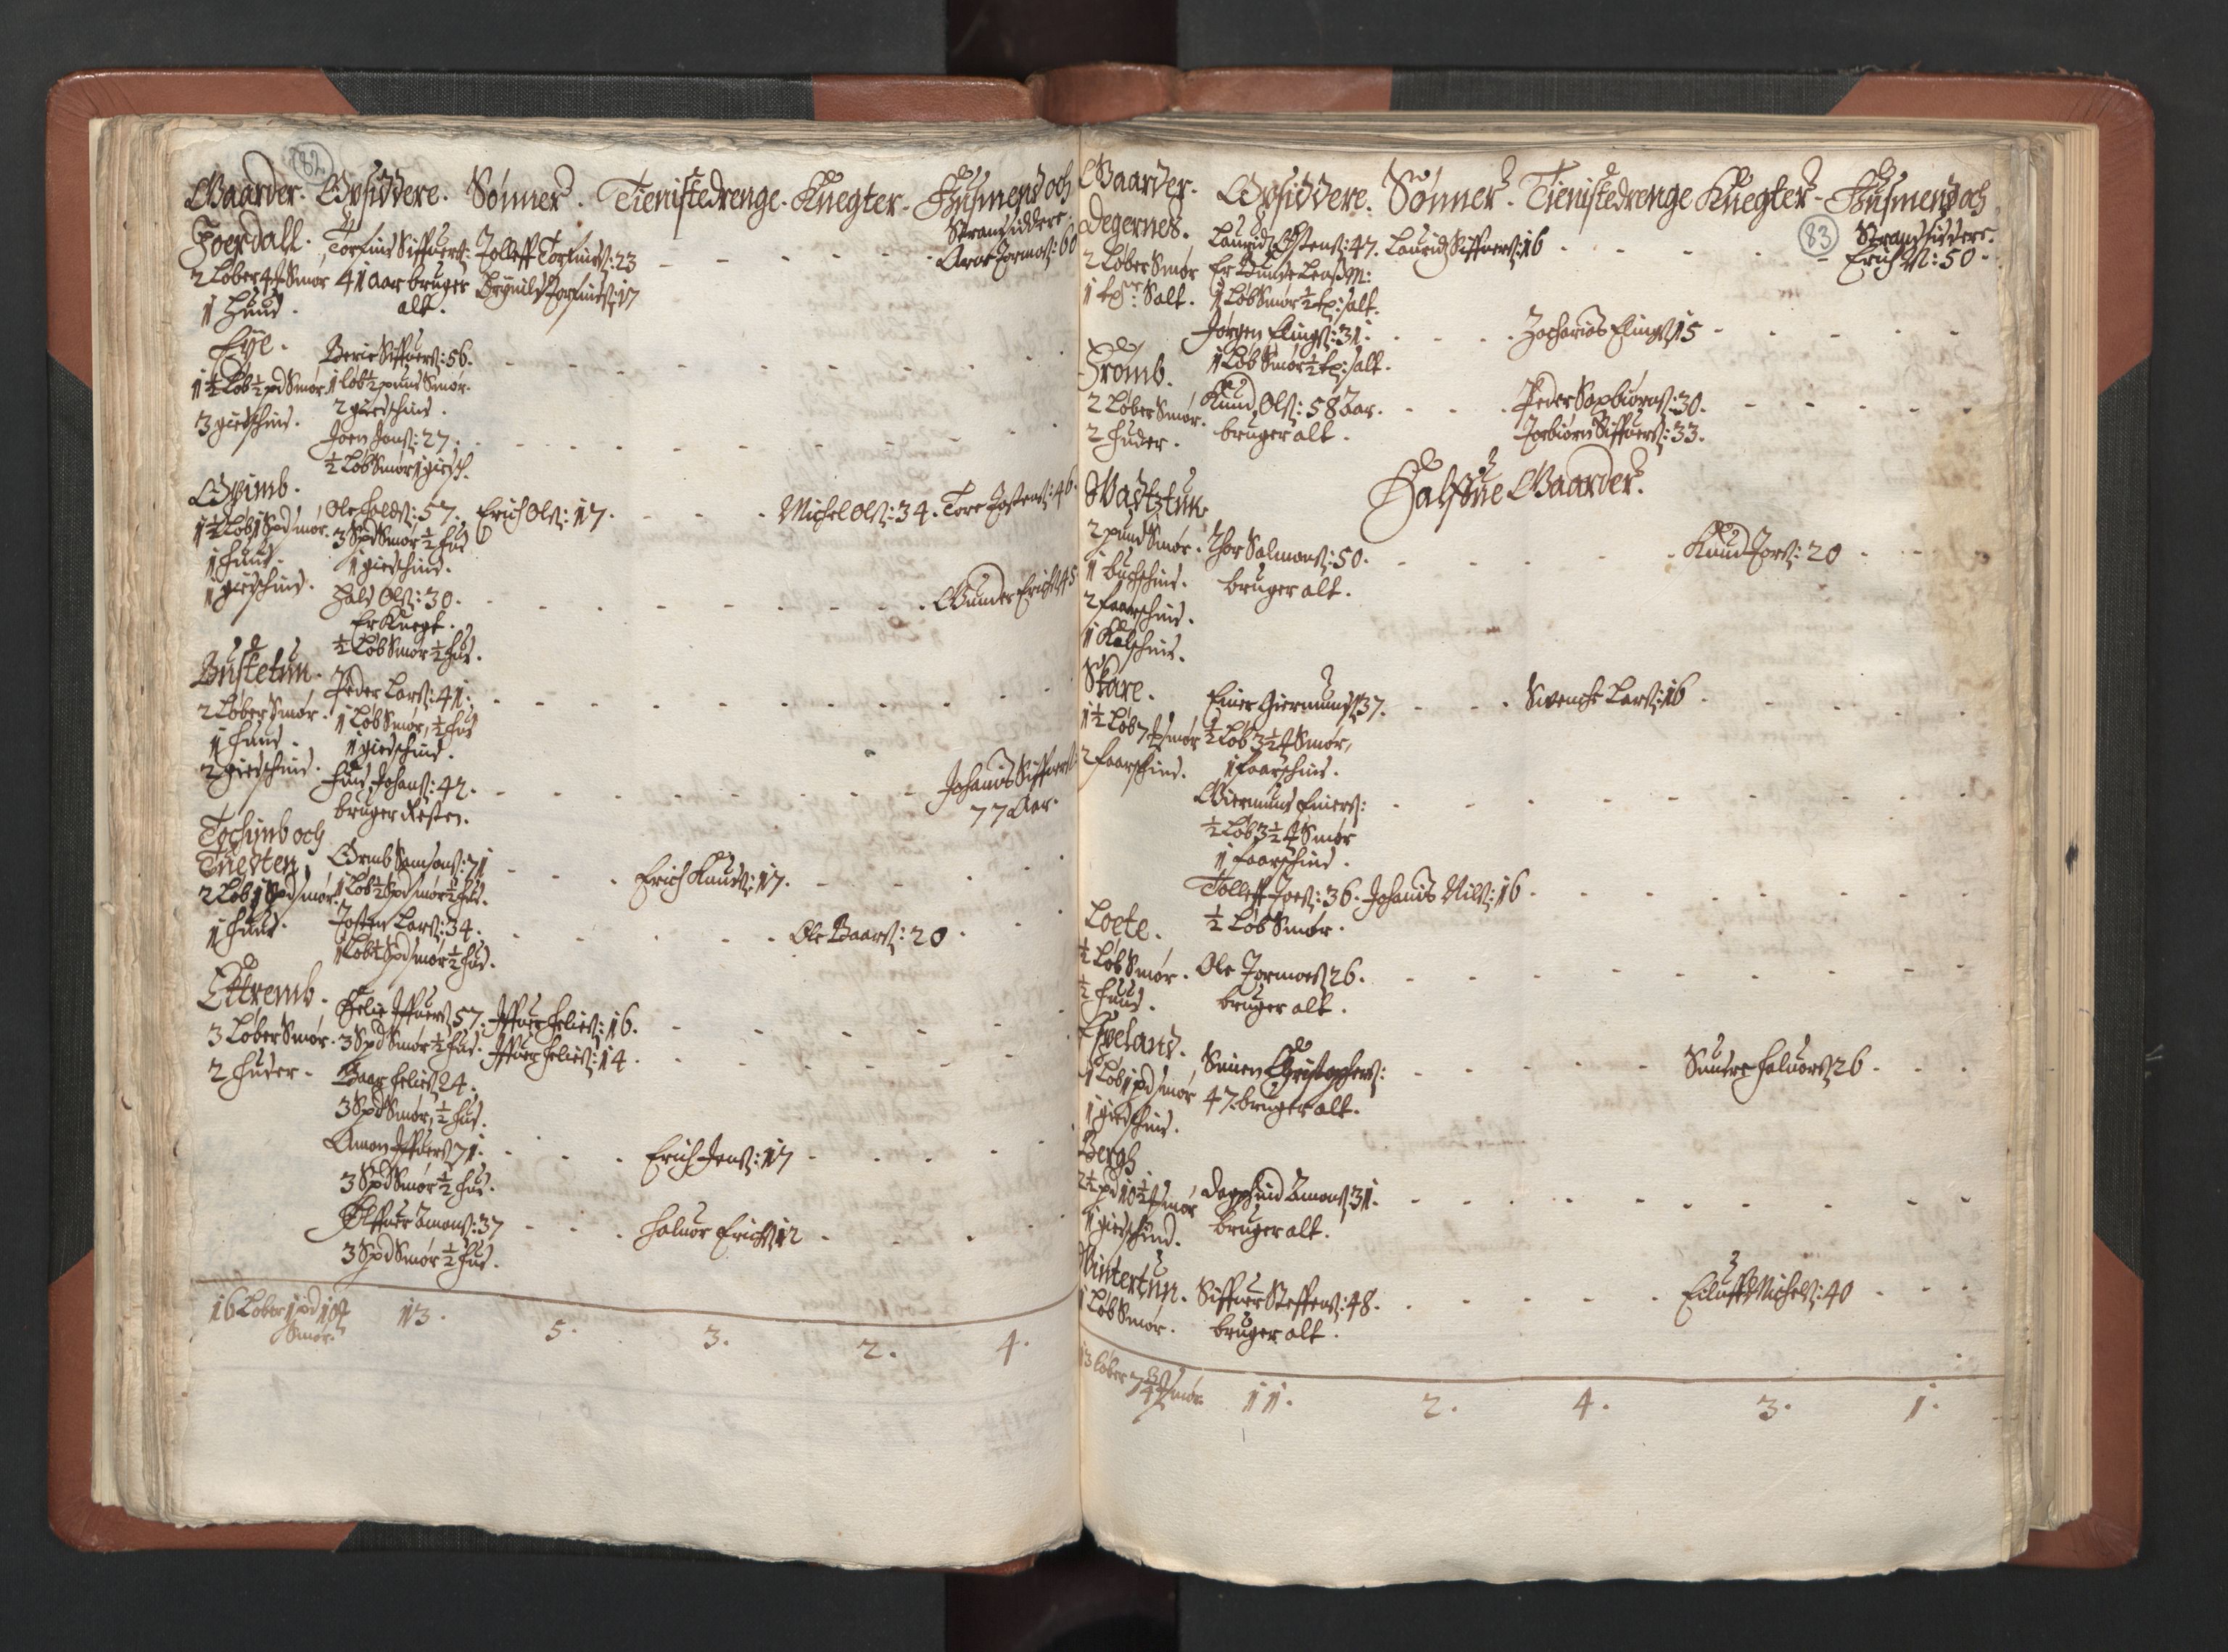 RA, Fogdenes og sorenskrivernes manntall 1664-1666, nr. 14: Hardanger len, Ytre Sogn fogderi og Indre Sogn fogderi, 1664-1665, s. 82-83